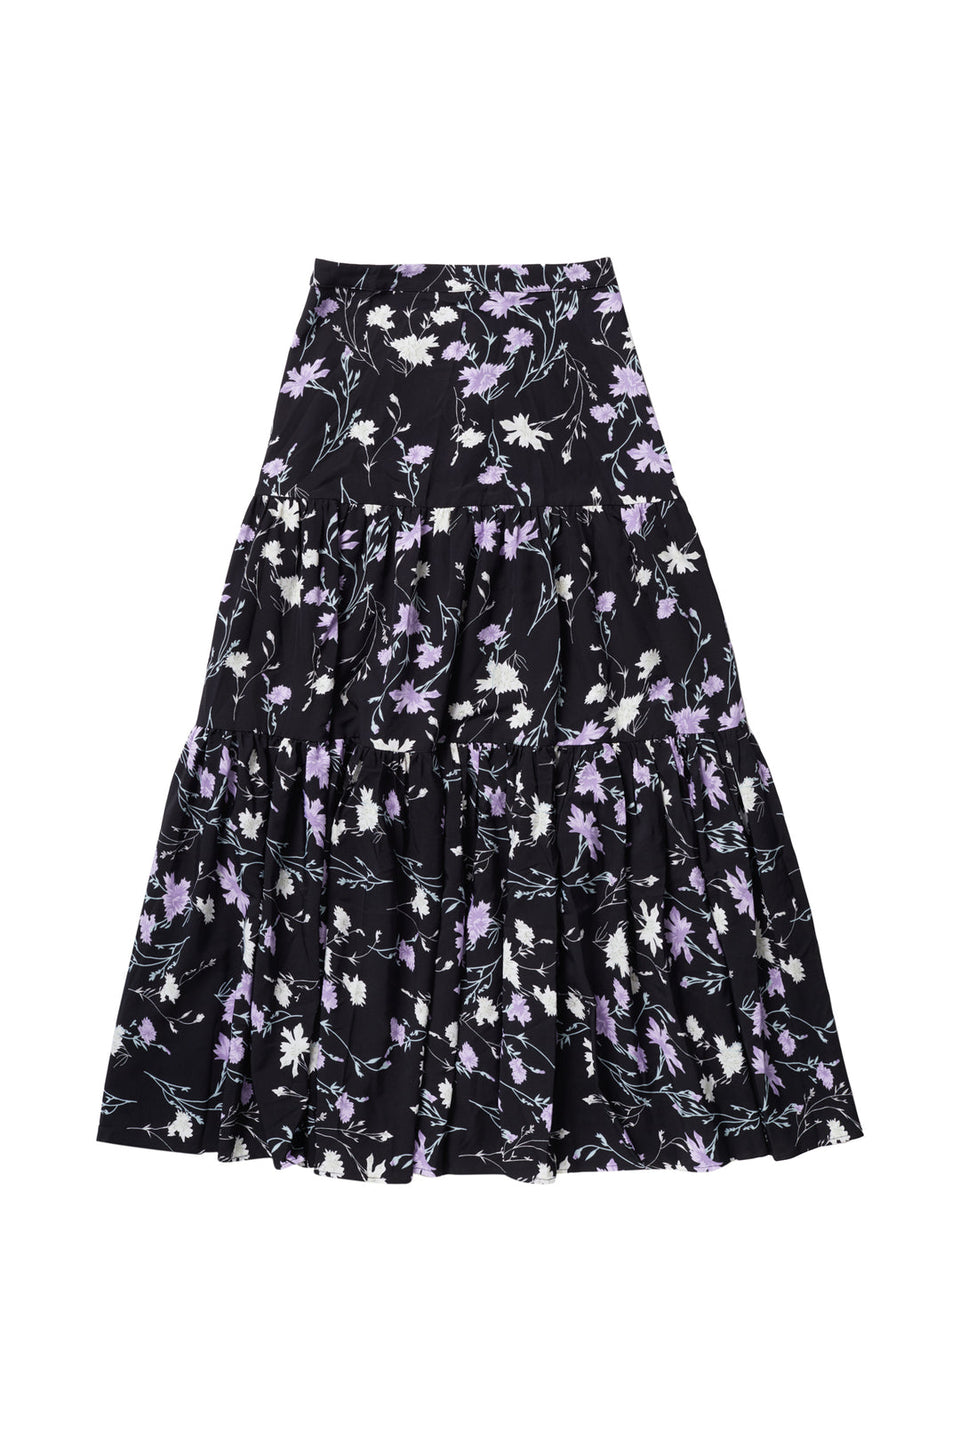 Zaikamoya Purple Floral Black Skirt